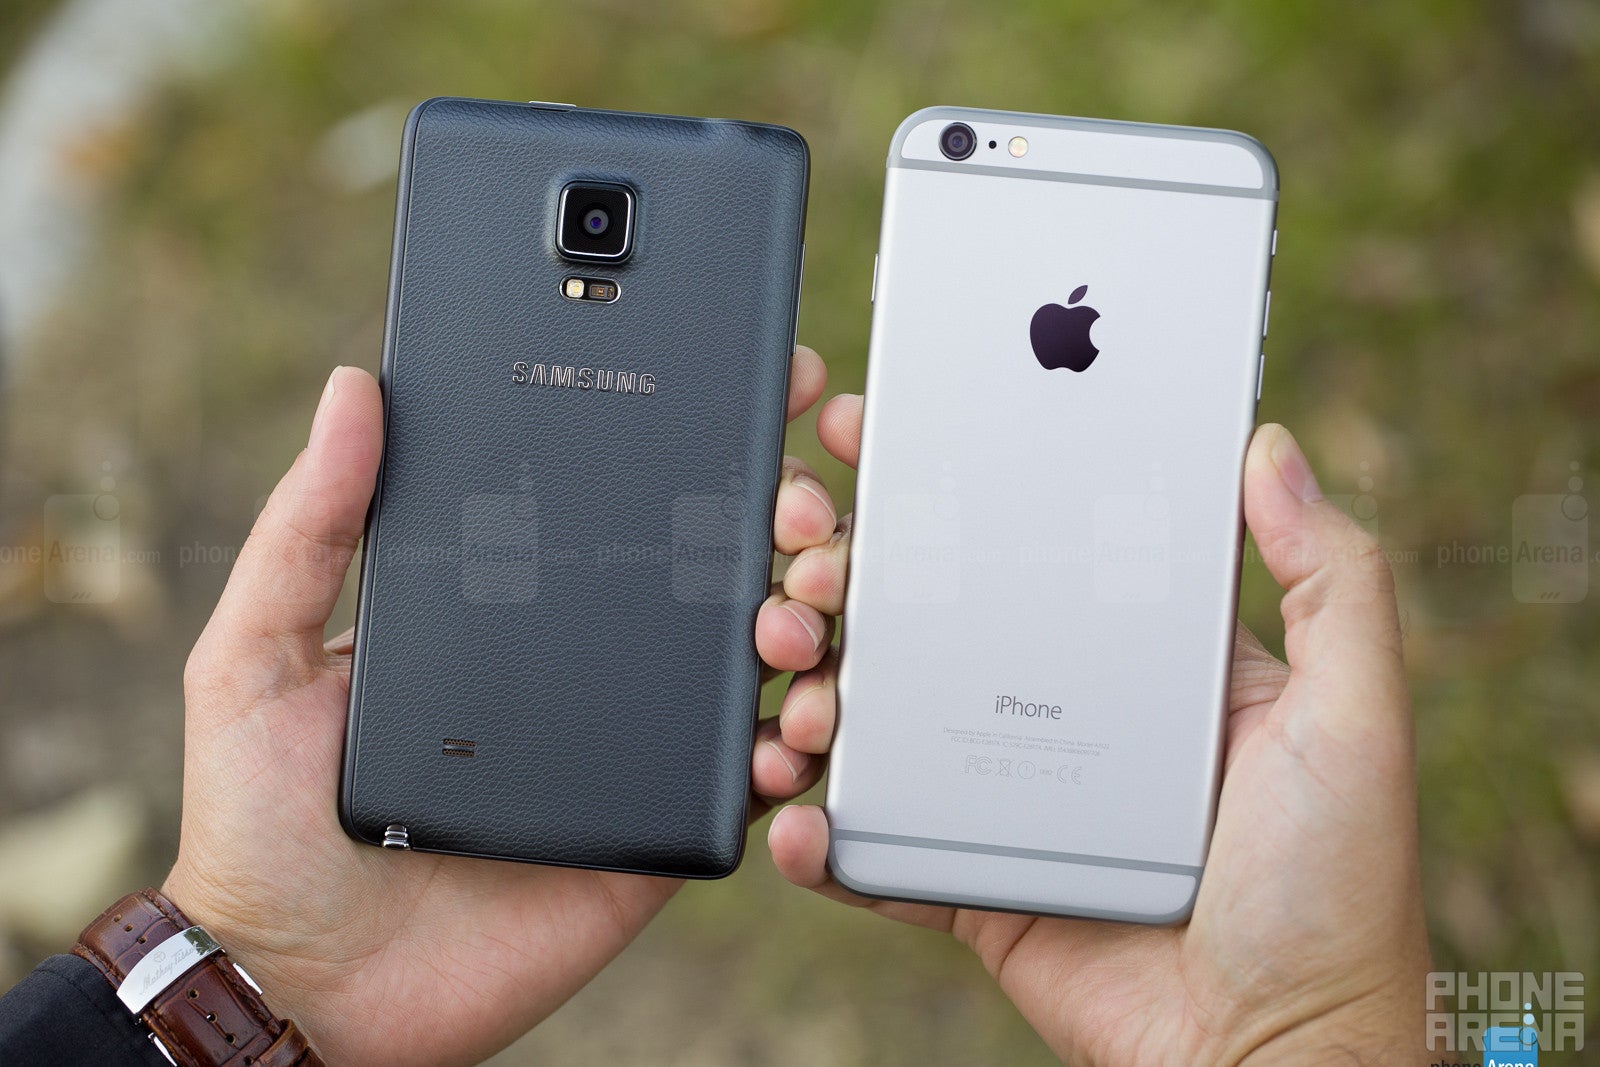 Samsung Galaxy Note Edge vs Apple iPhone 6 Plus